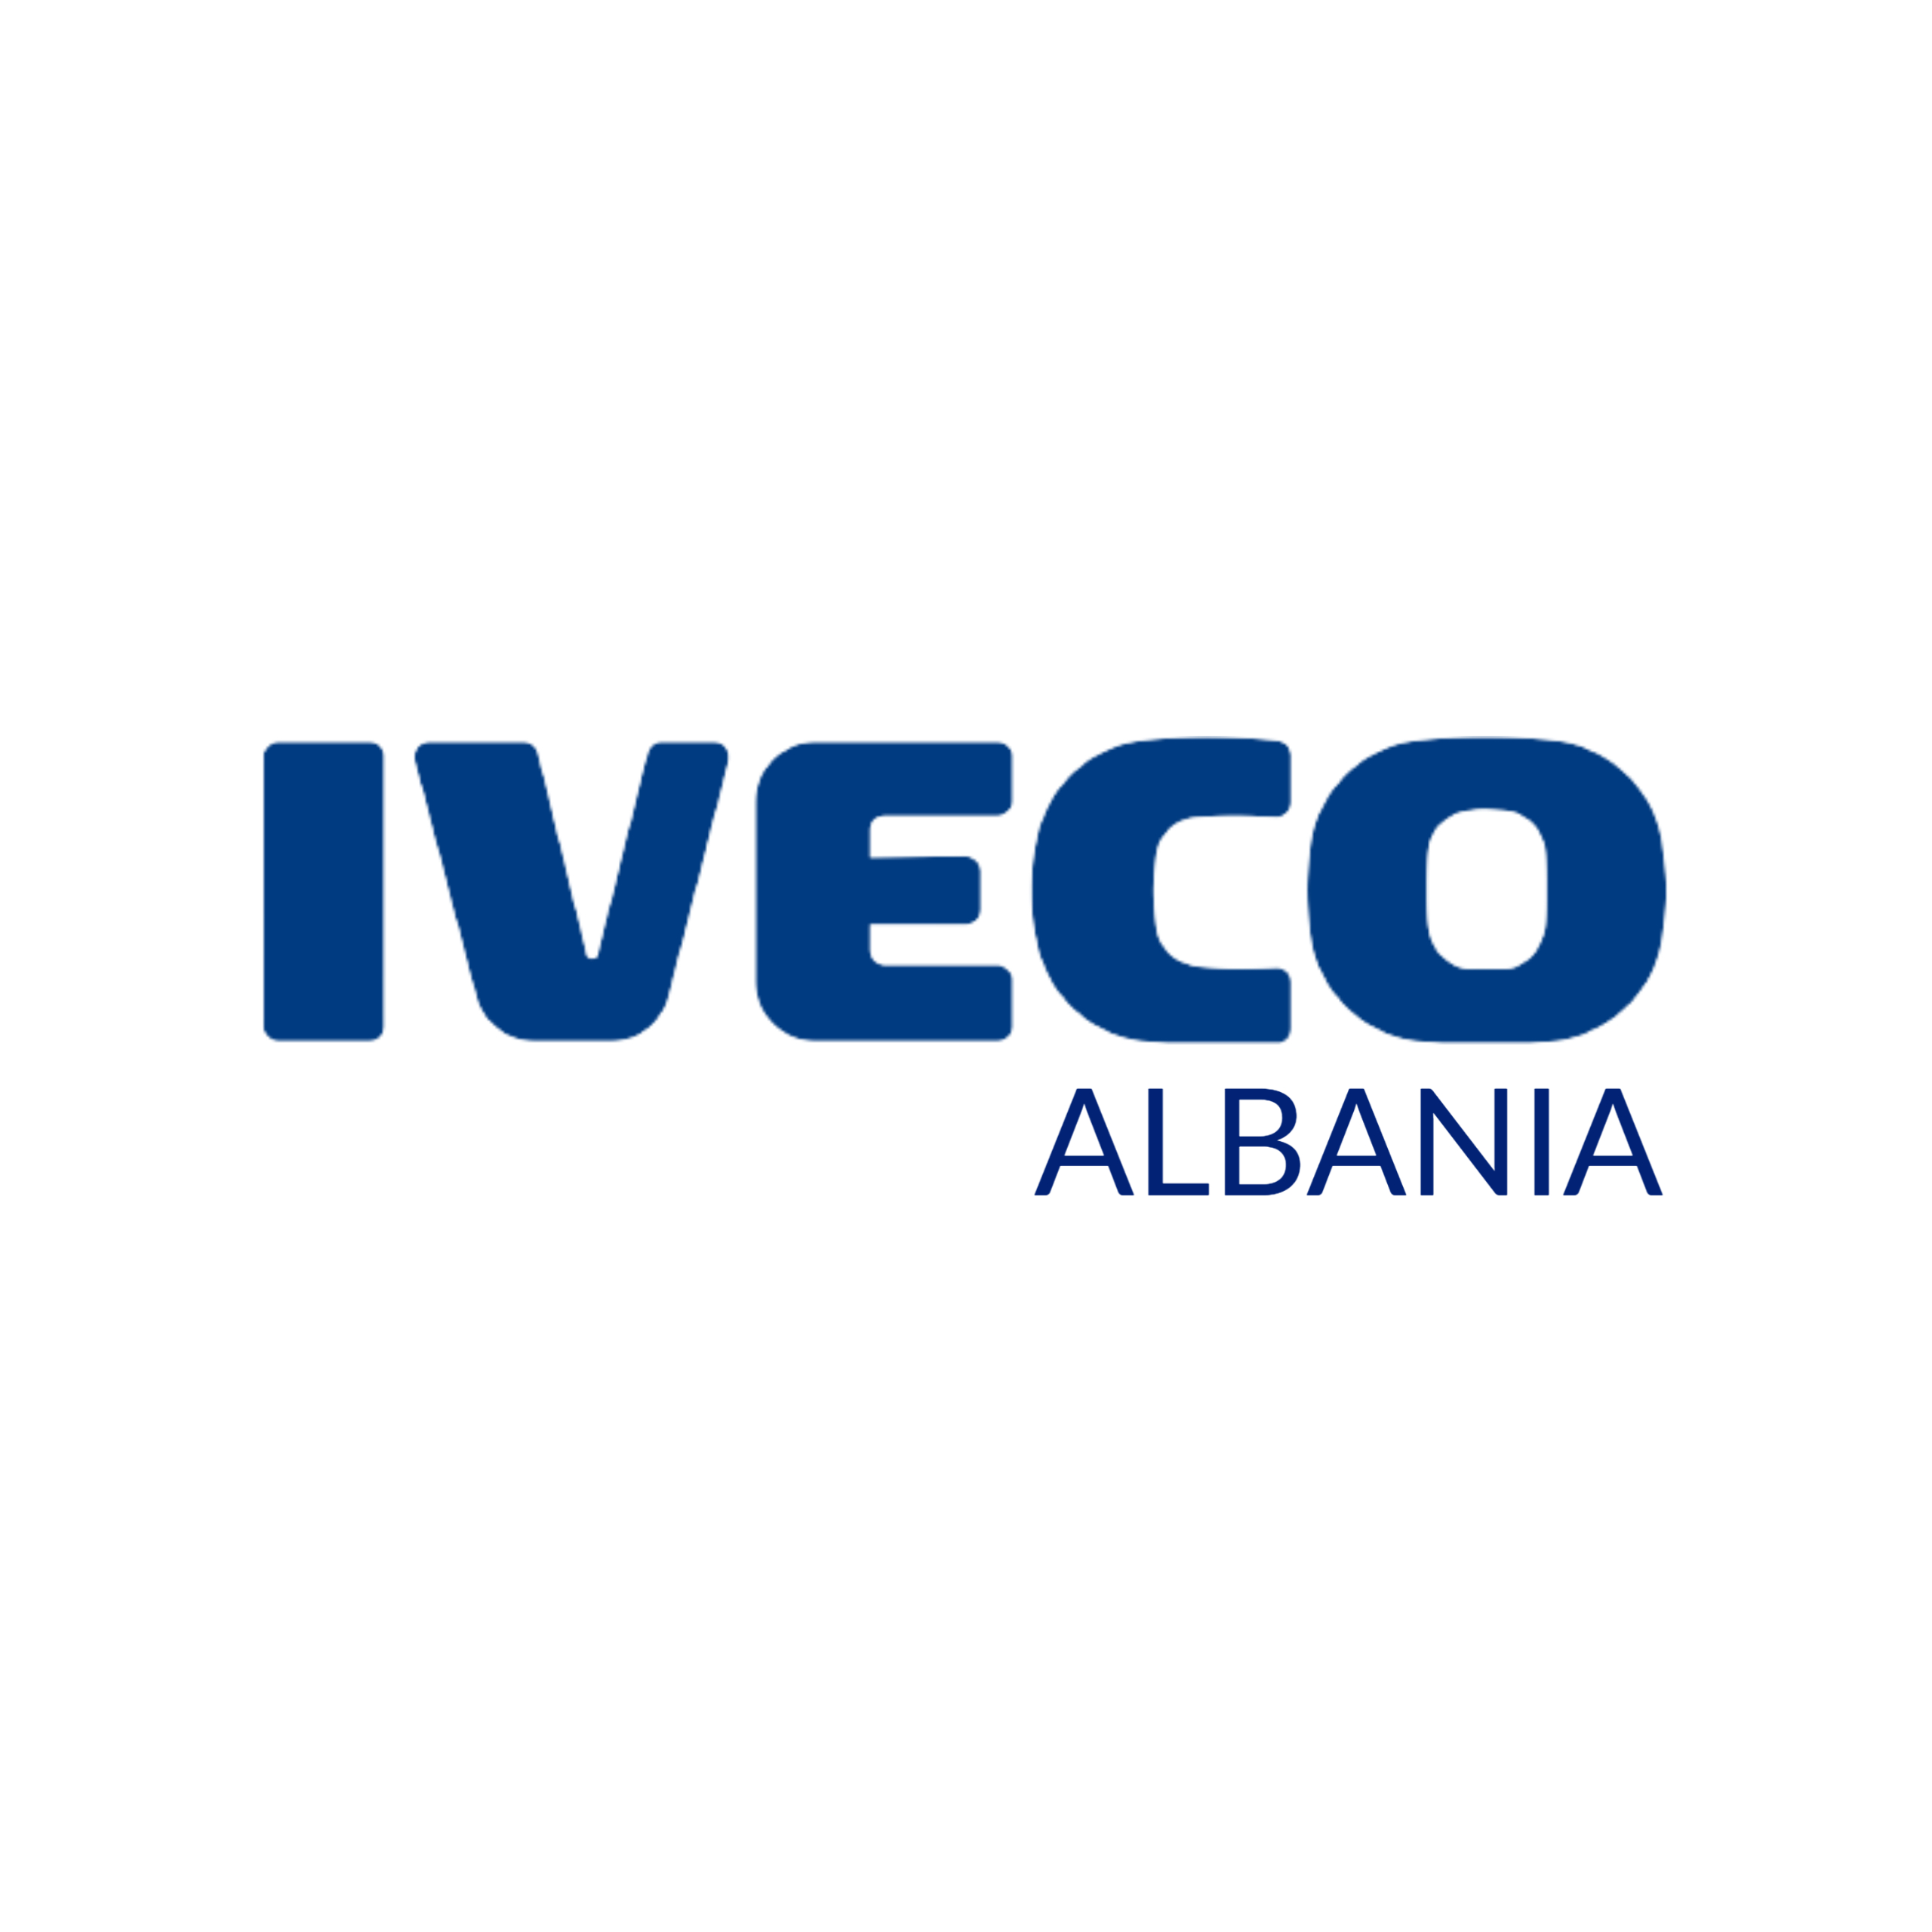 IVECO ALBANIA